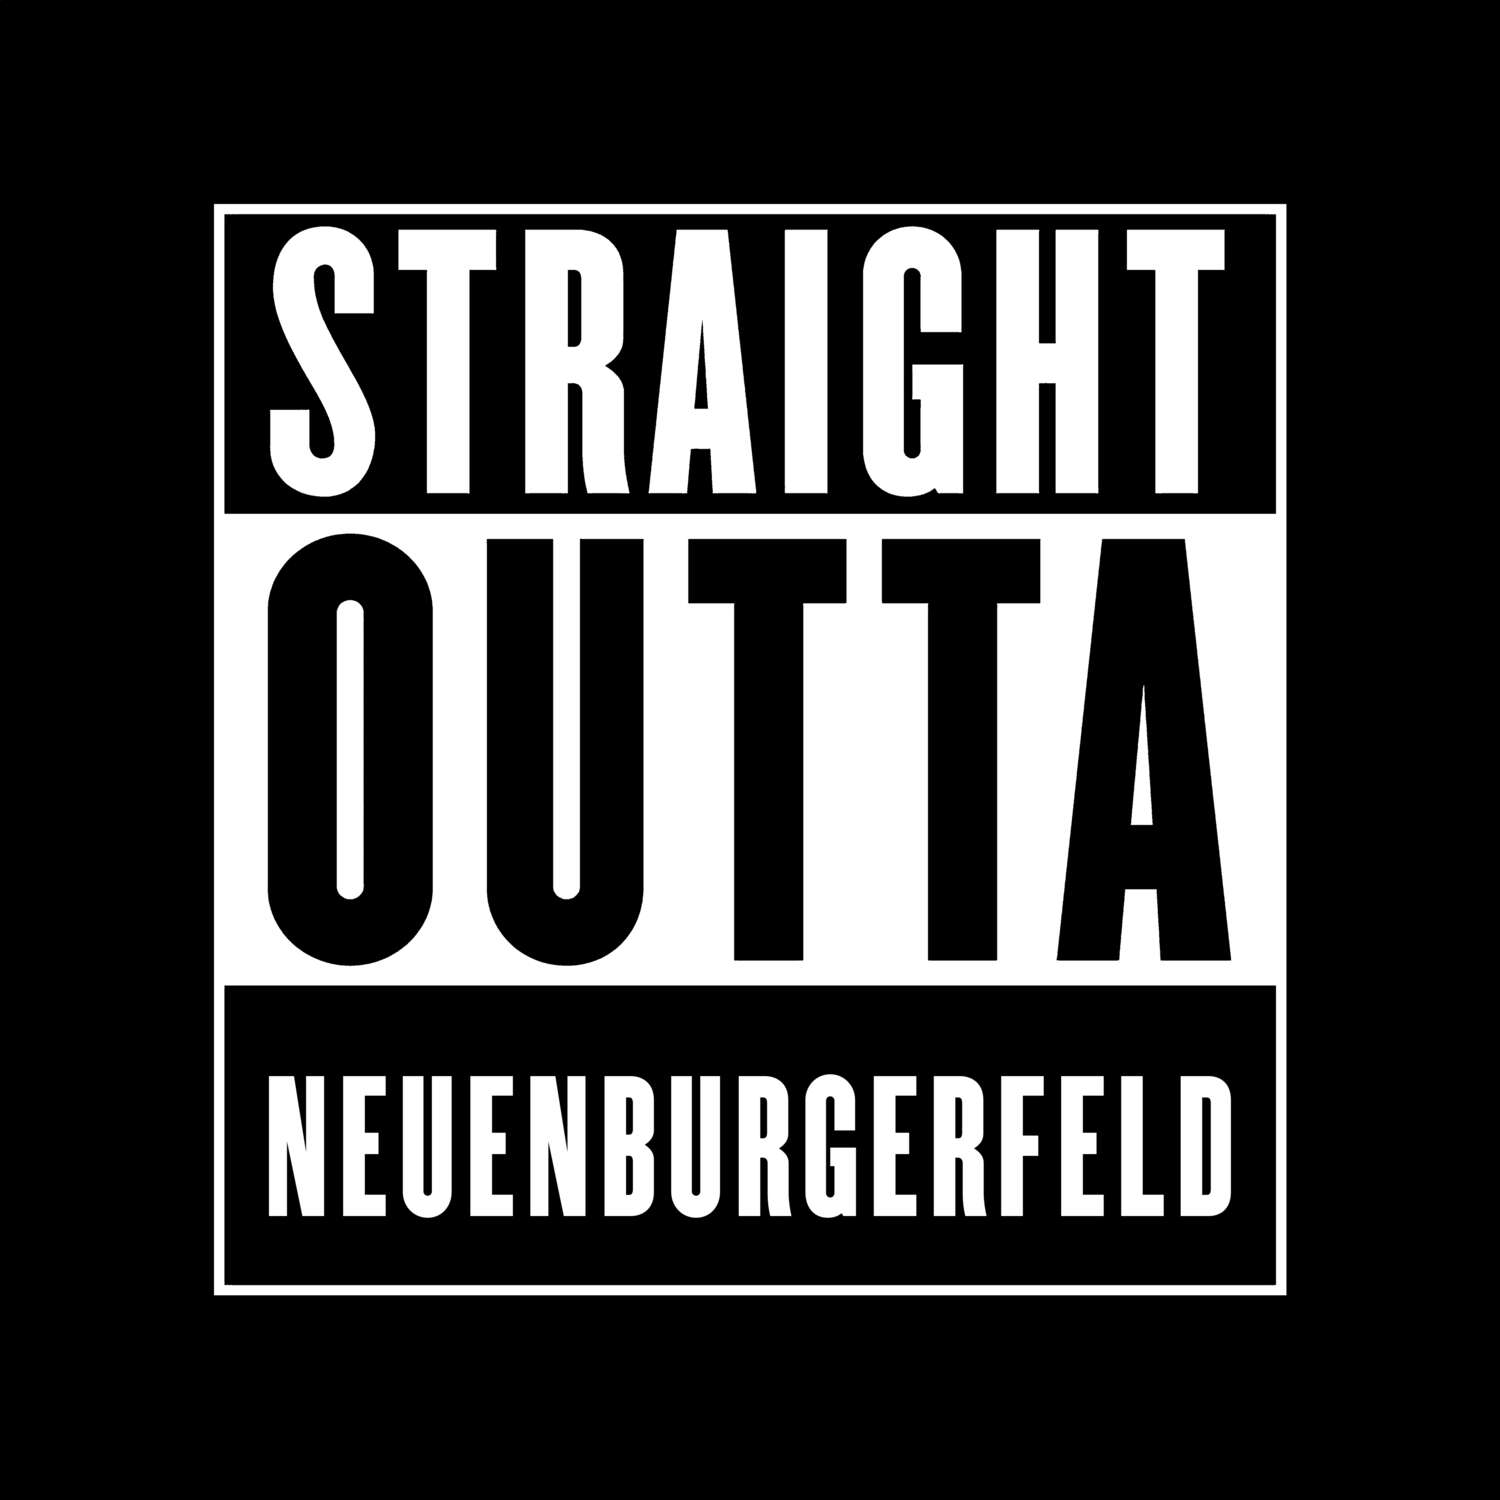 Neuenburgerfeld T-Shirt »Straight Outta«